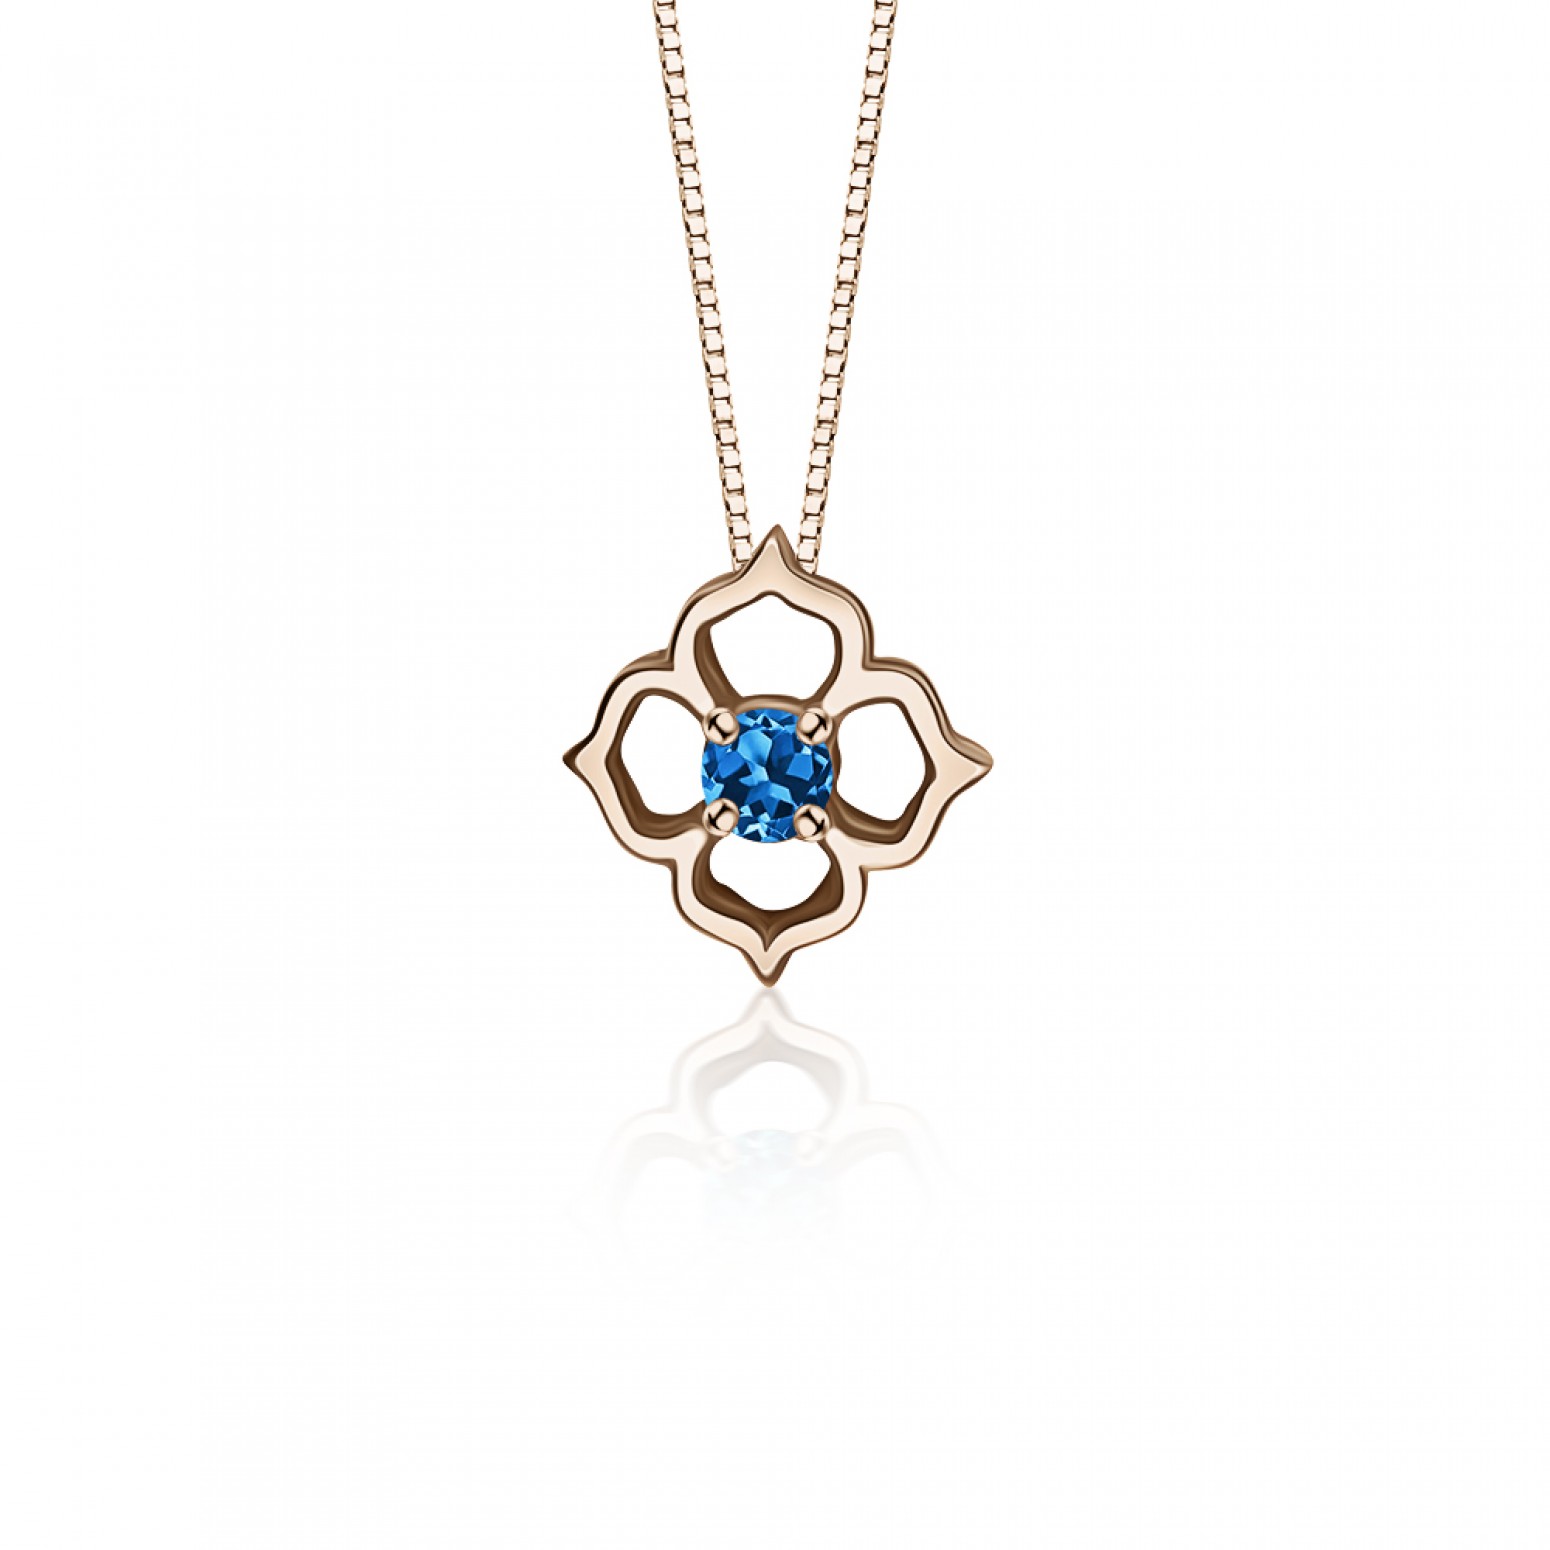 Flower necklace, Κ18 pink gold with blue diamond 0.17ct, ko4272 NECKLACES Κοσμηματα - chrilia.gr